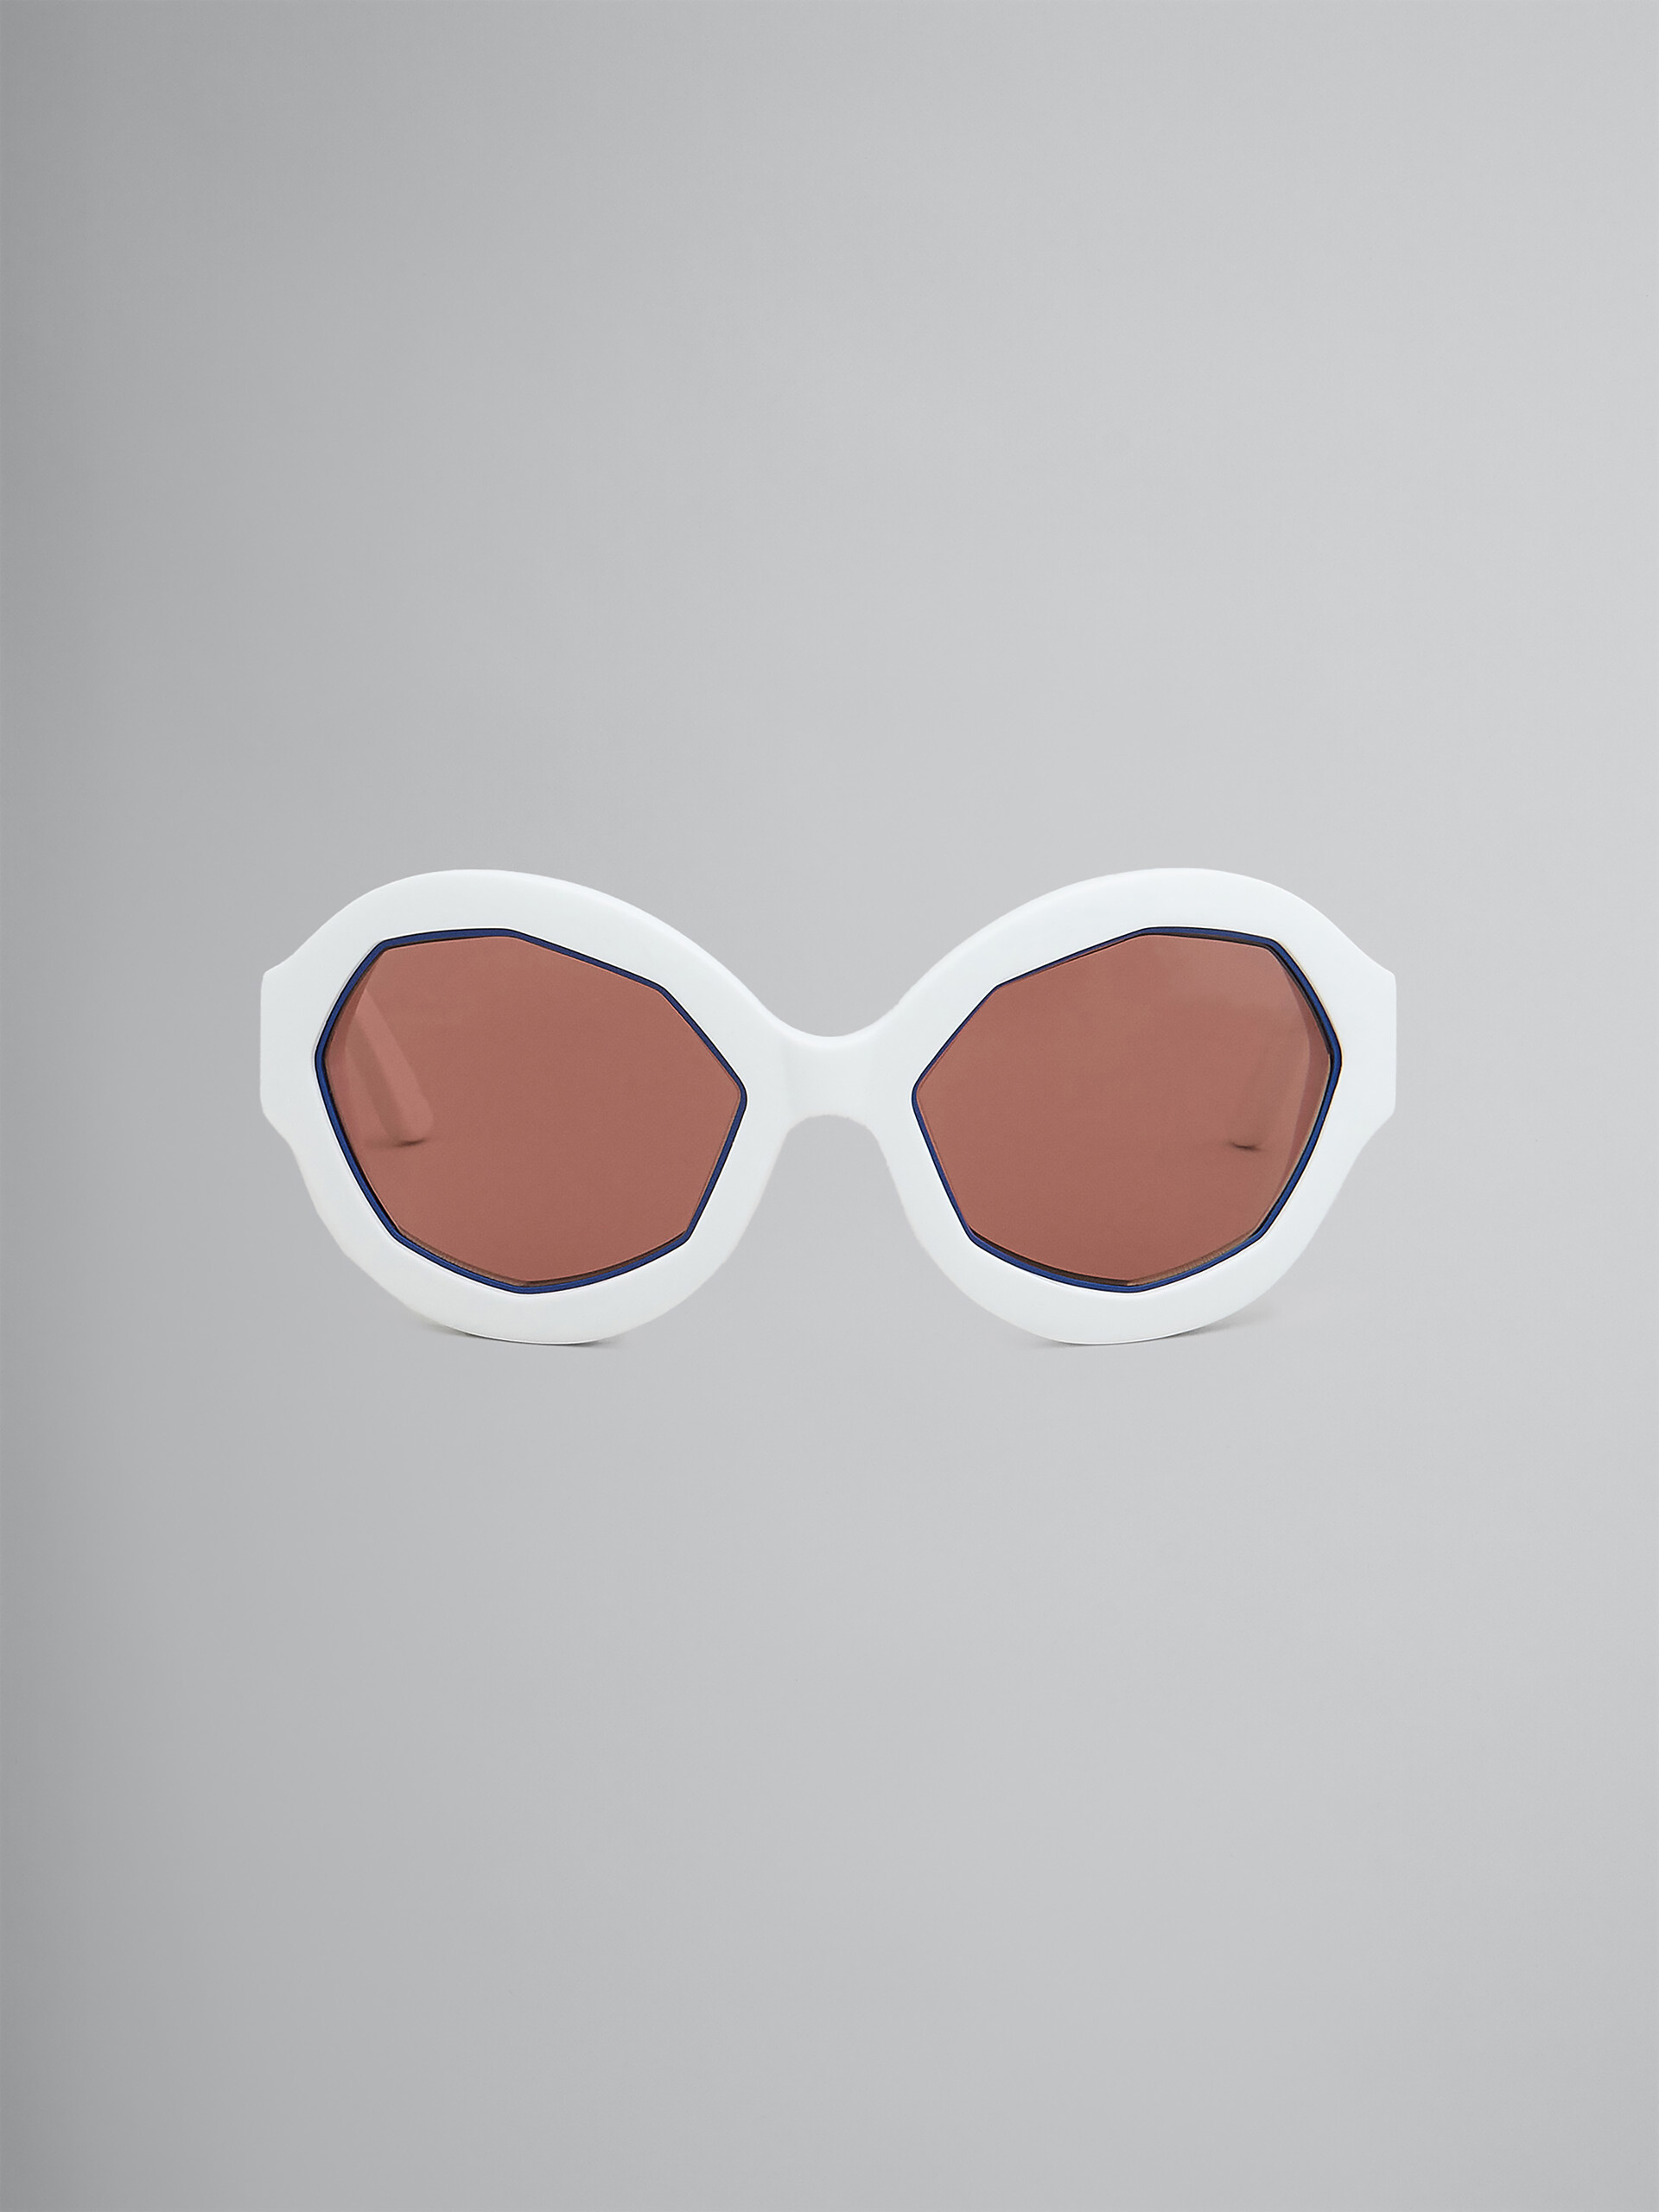 CUMULUS CLOUD Sonnenbrille aus Acetat in Weiß - Optisch - Image 1